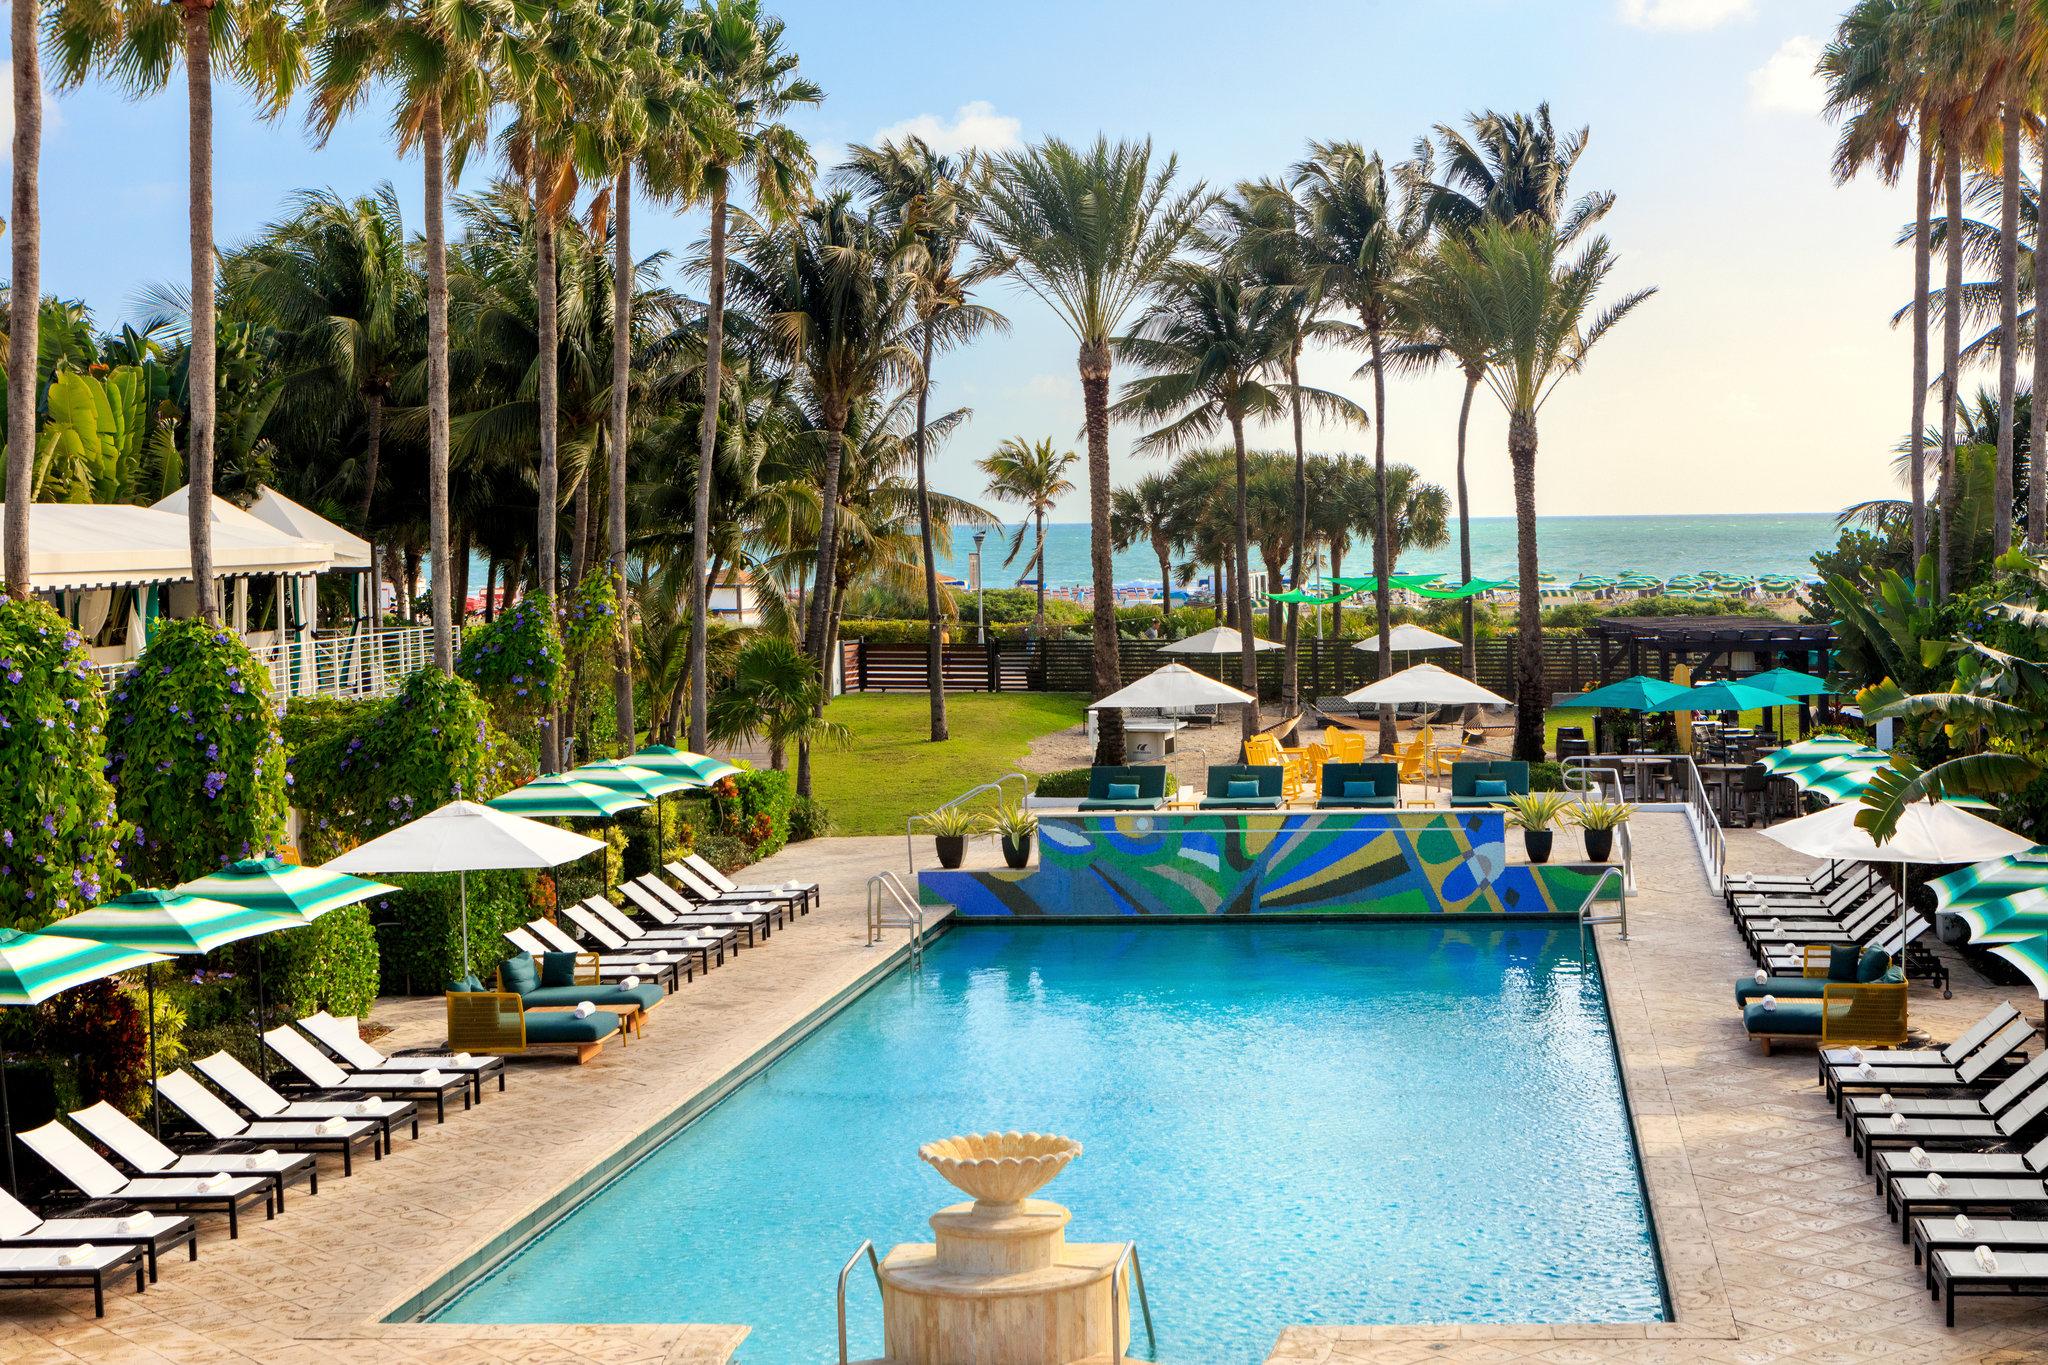 Kimpton Surfcomber Hotel in Miami Beach, FL